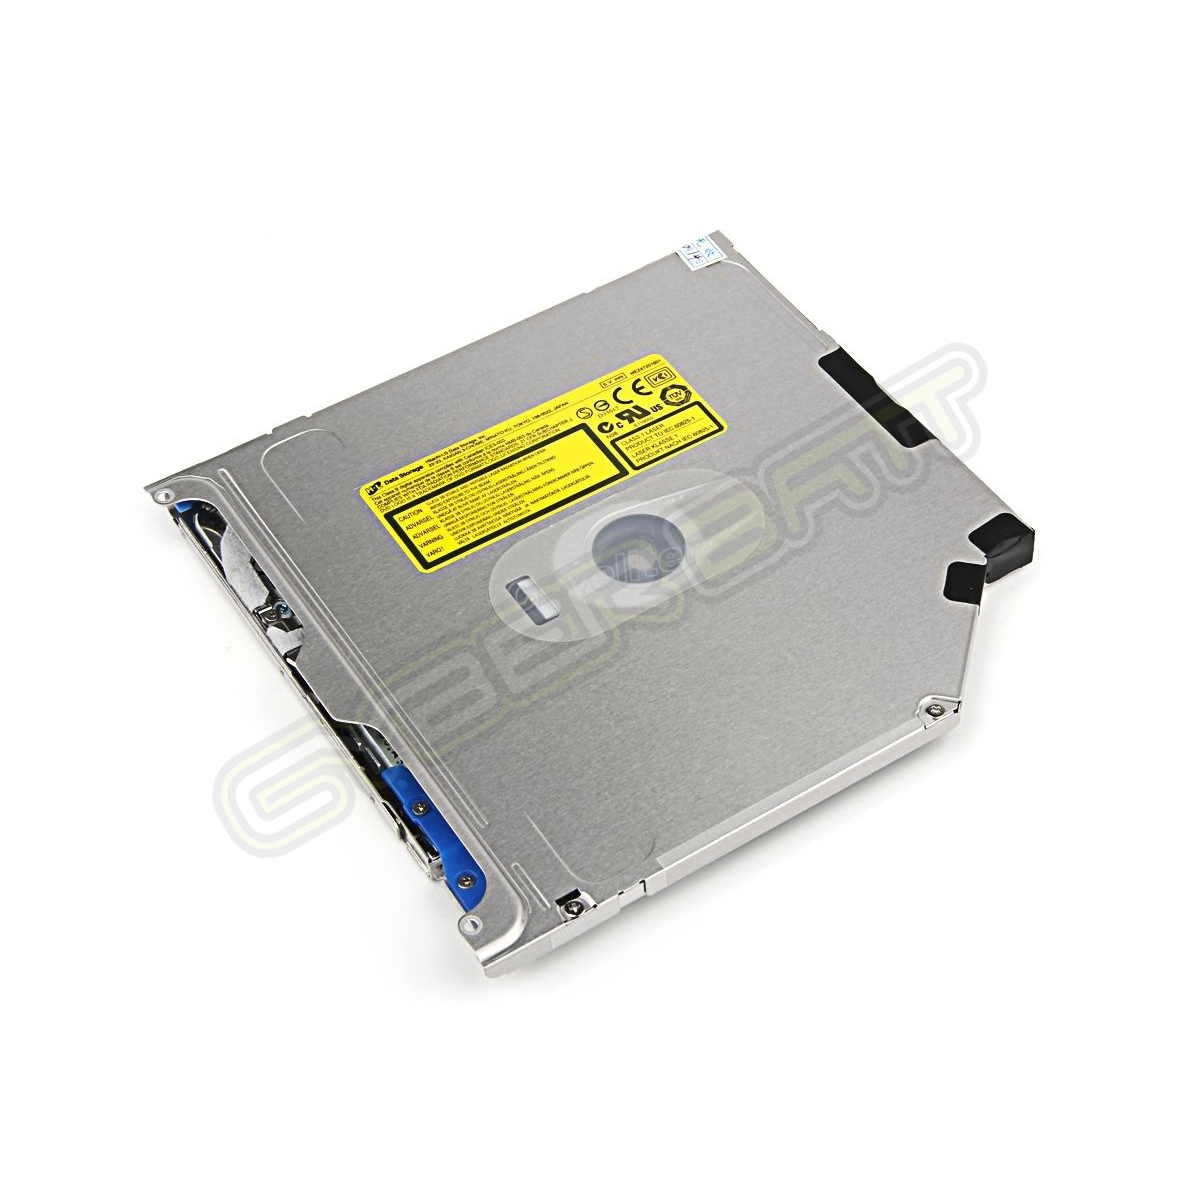 GS23N  DVD±RW DL Slot-Loading Notebook SATA Drive for Apple MacBooks 